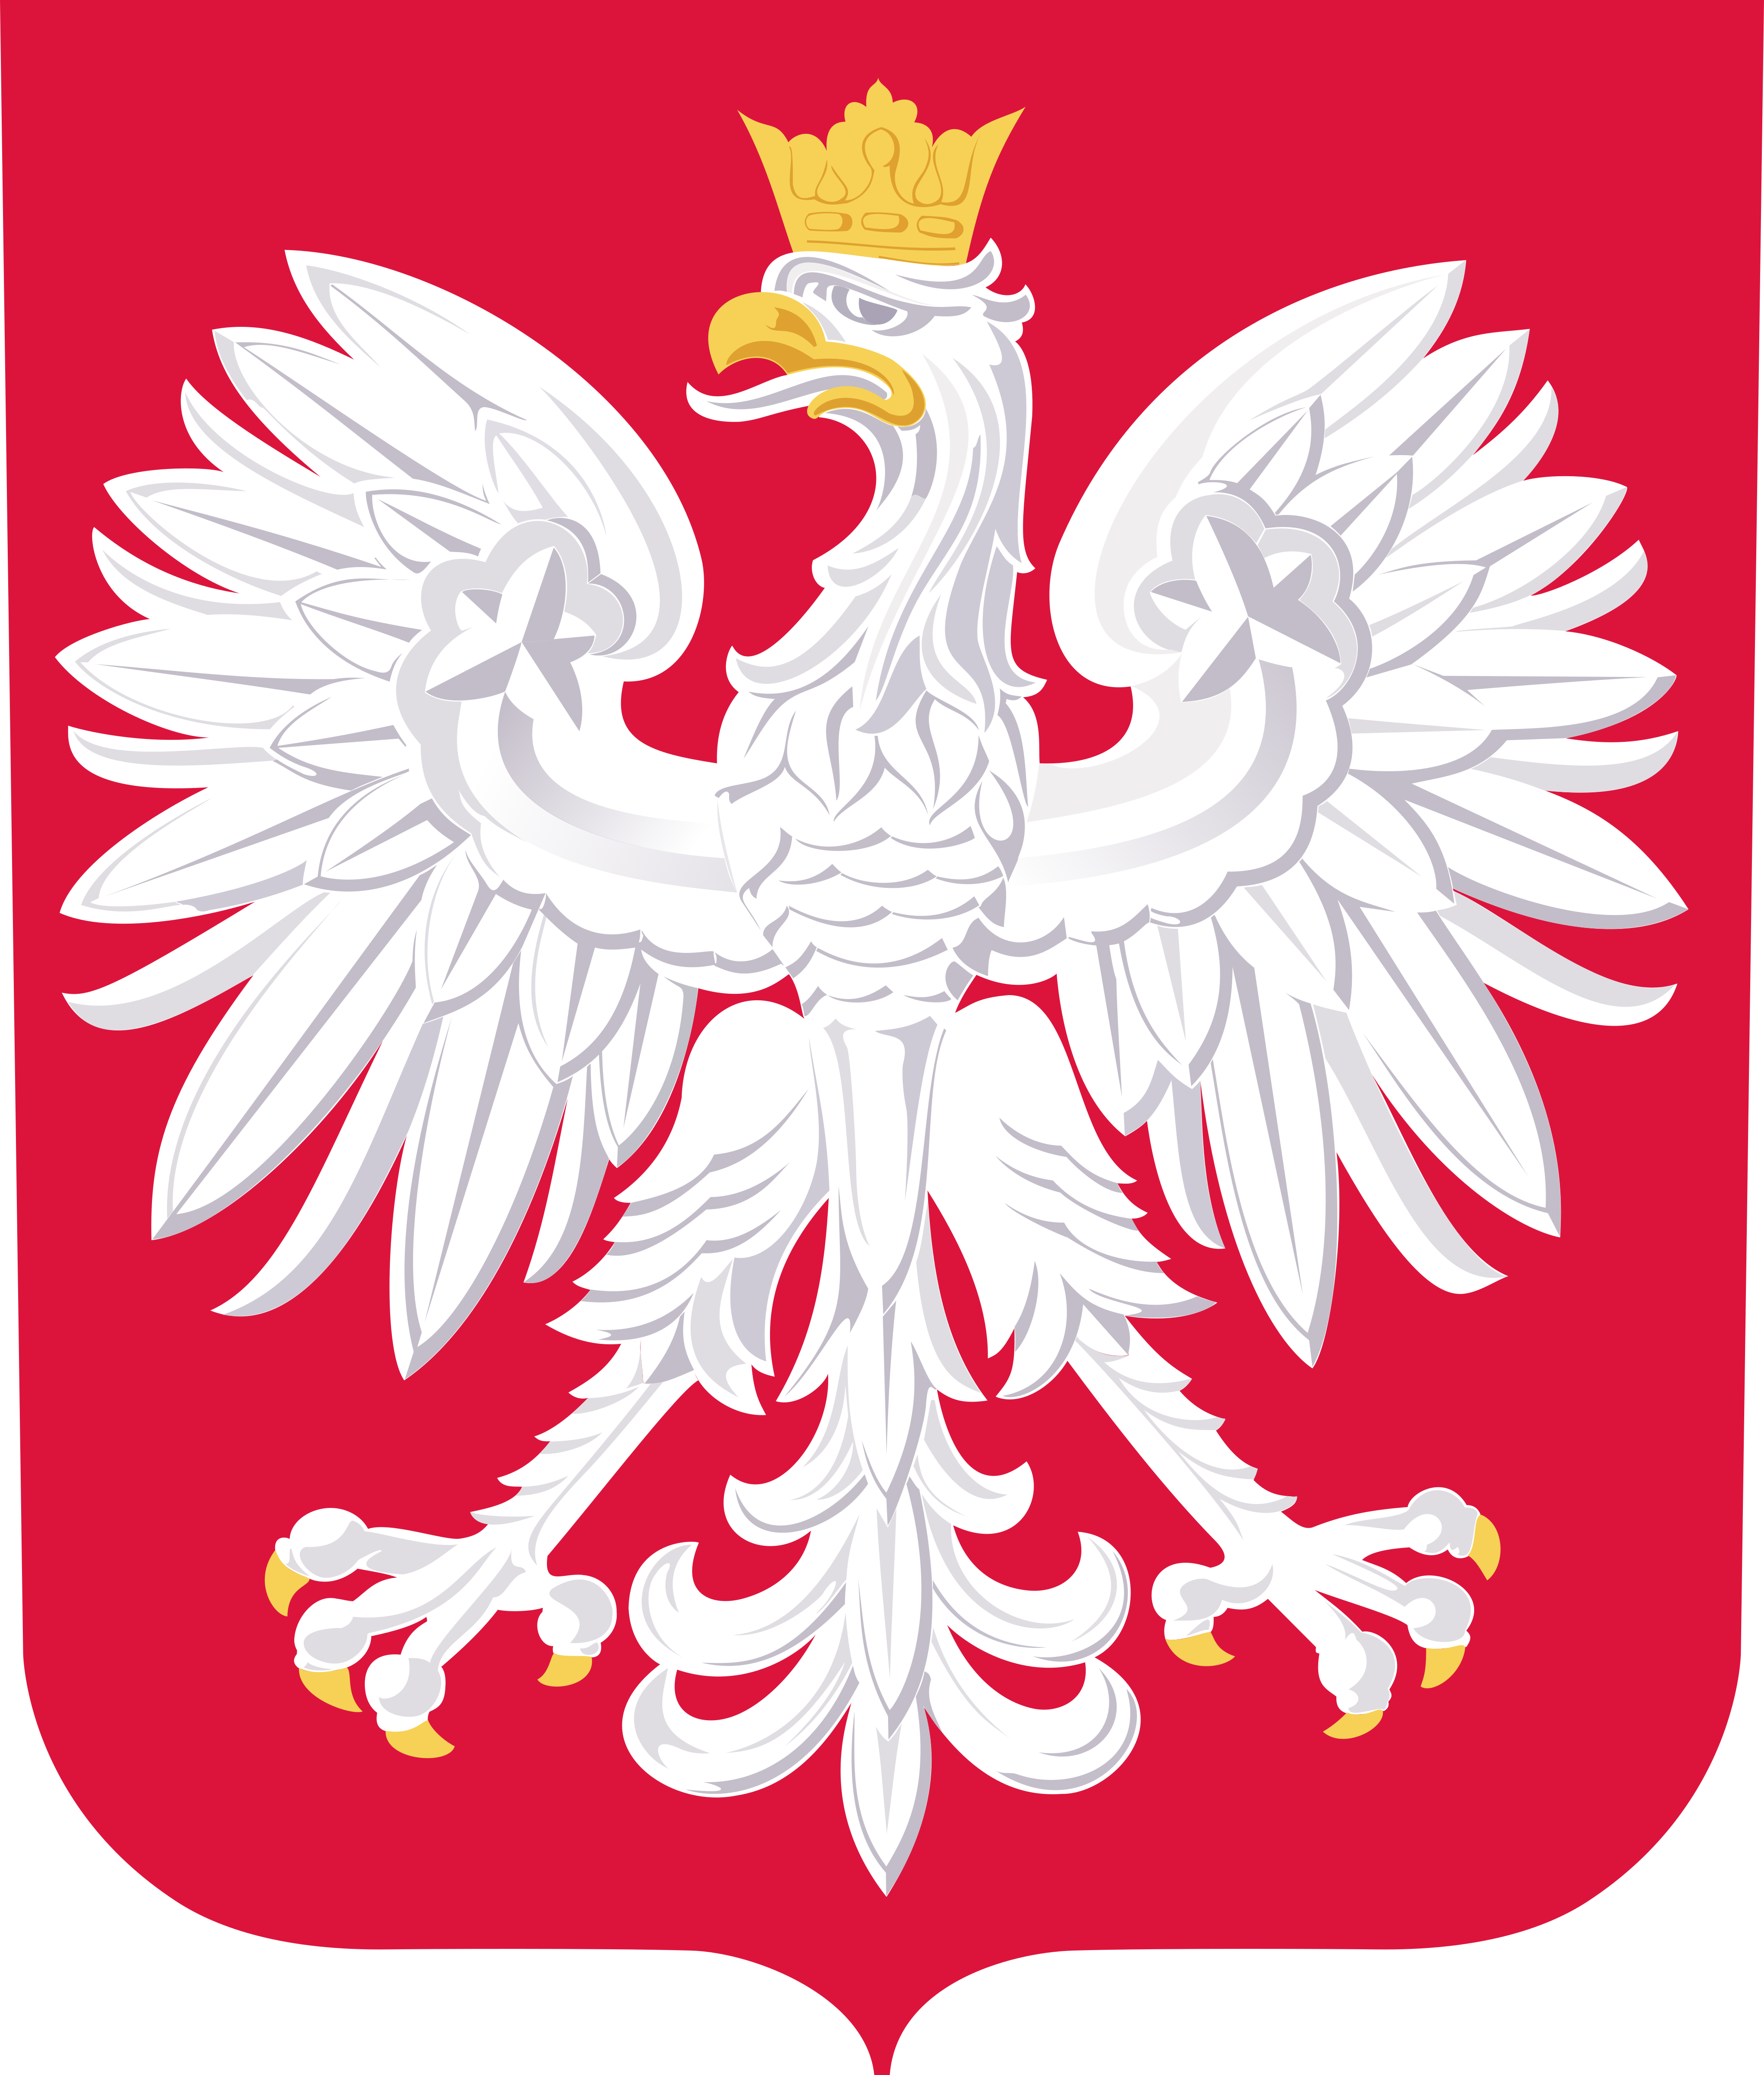 poland national football team logo - Équipe de Pologne de Football Logo